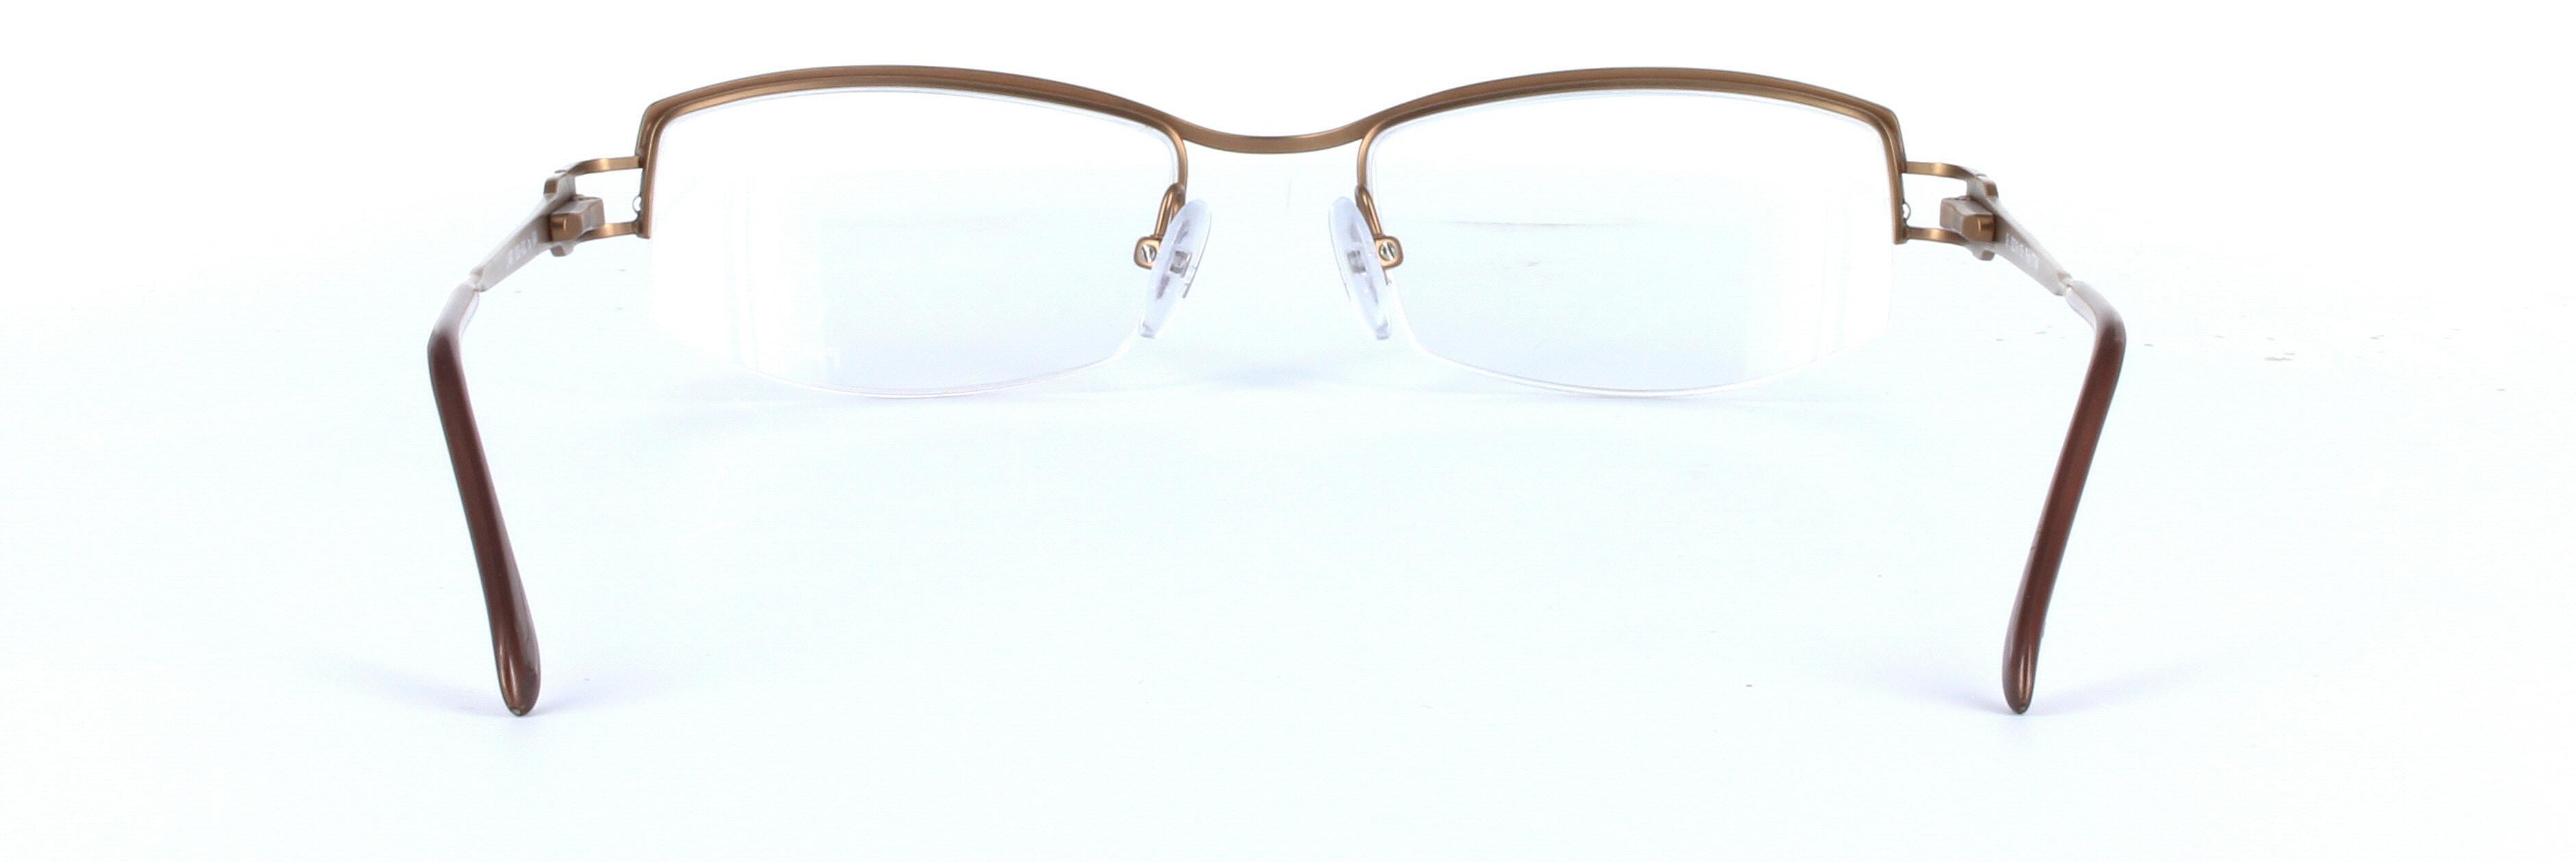 L'ART (1303-003) Brown Semi Rimless Rectangular Titanium Glasses - Image View 3